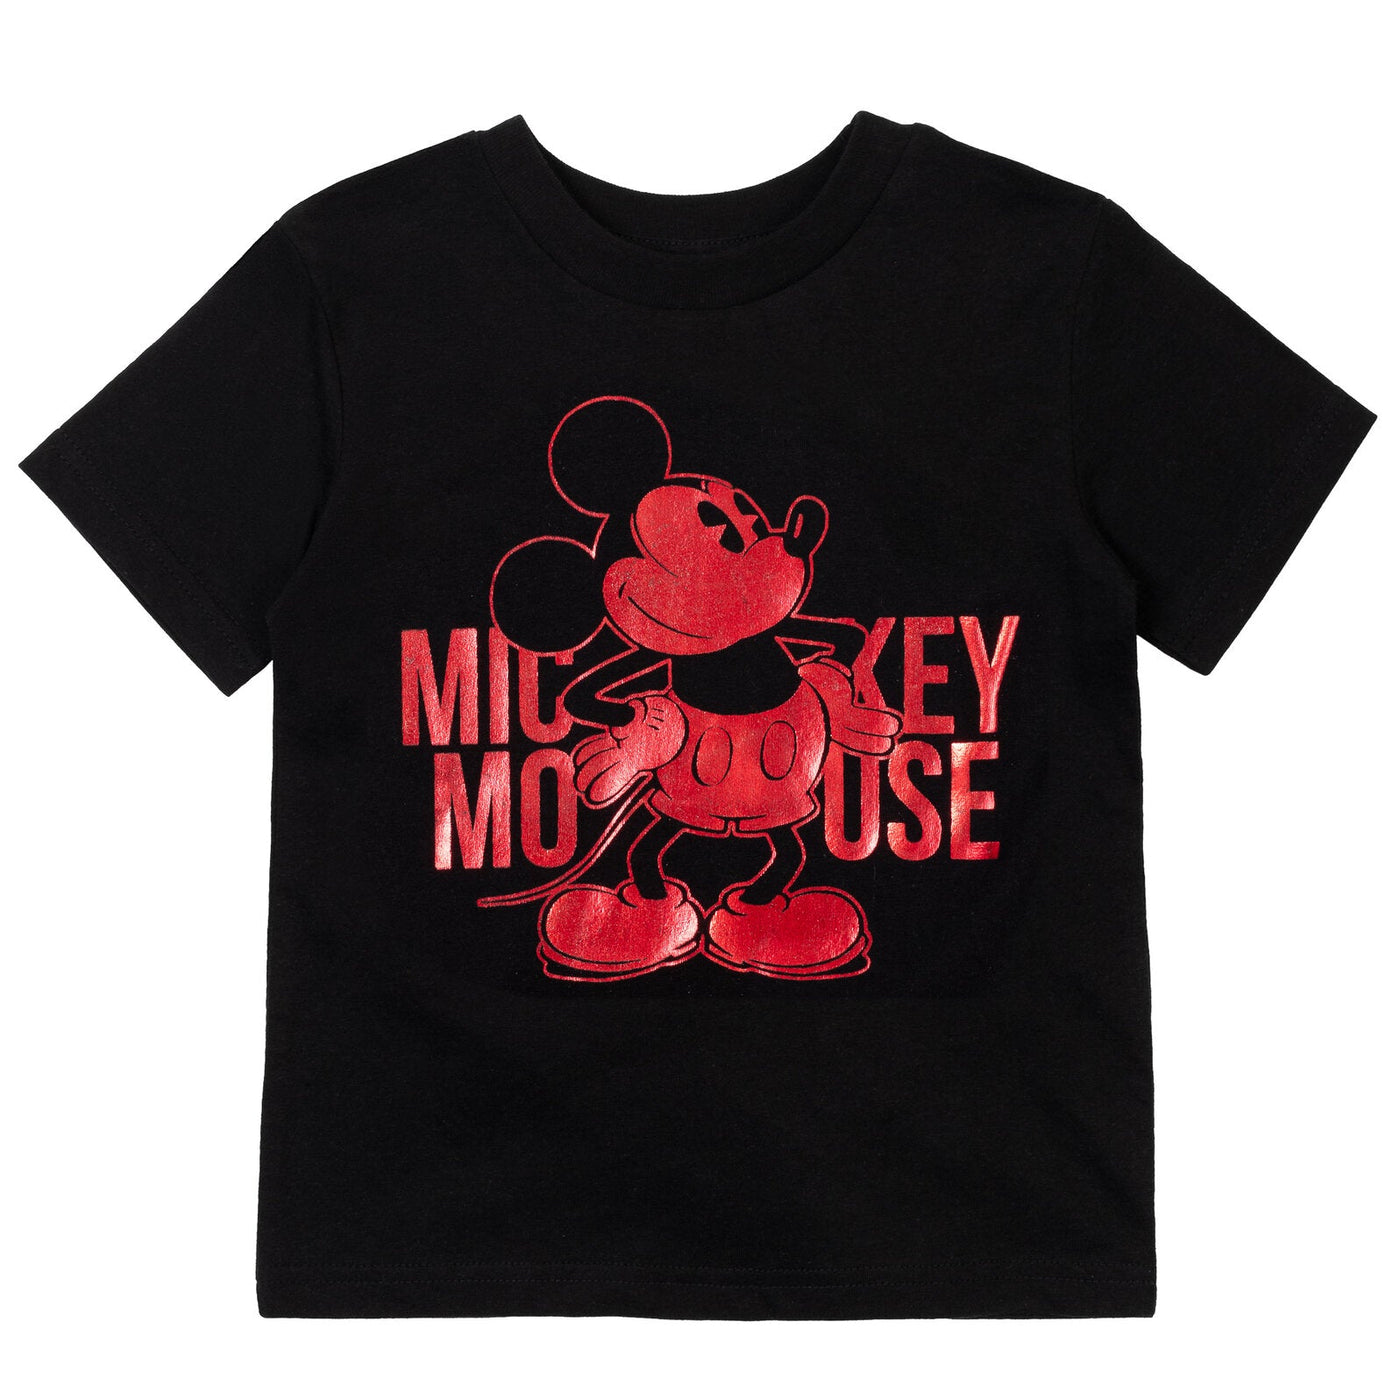 Disney Mickey Mouse Metallic Print T-Shirt - imagikids